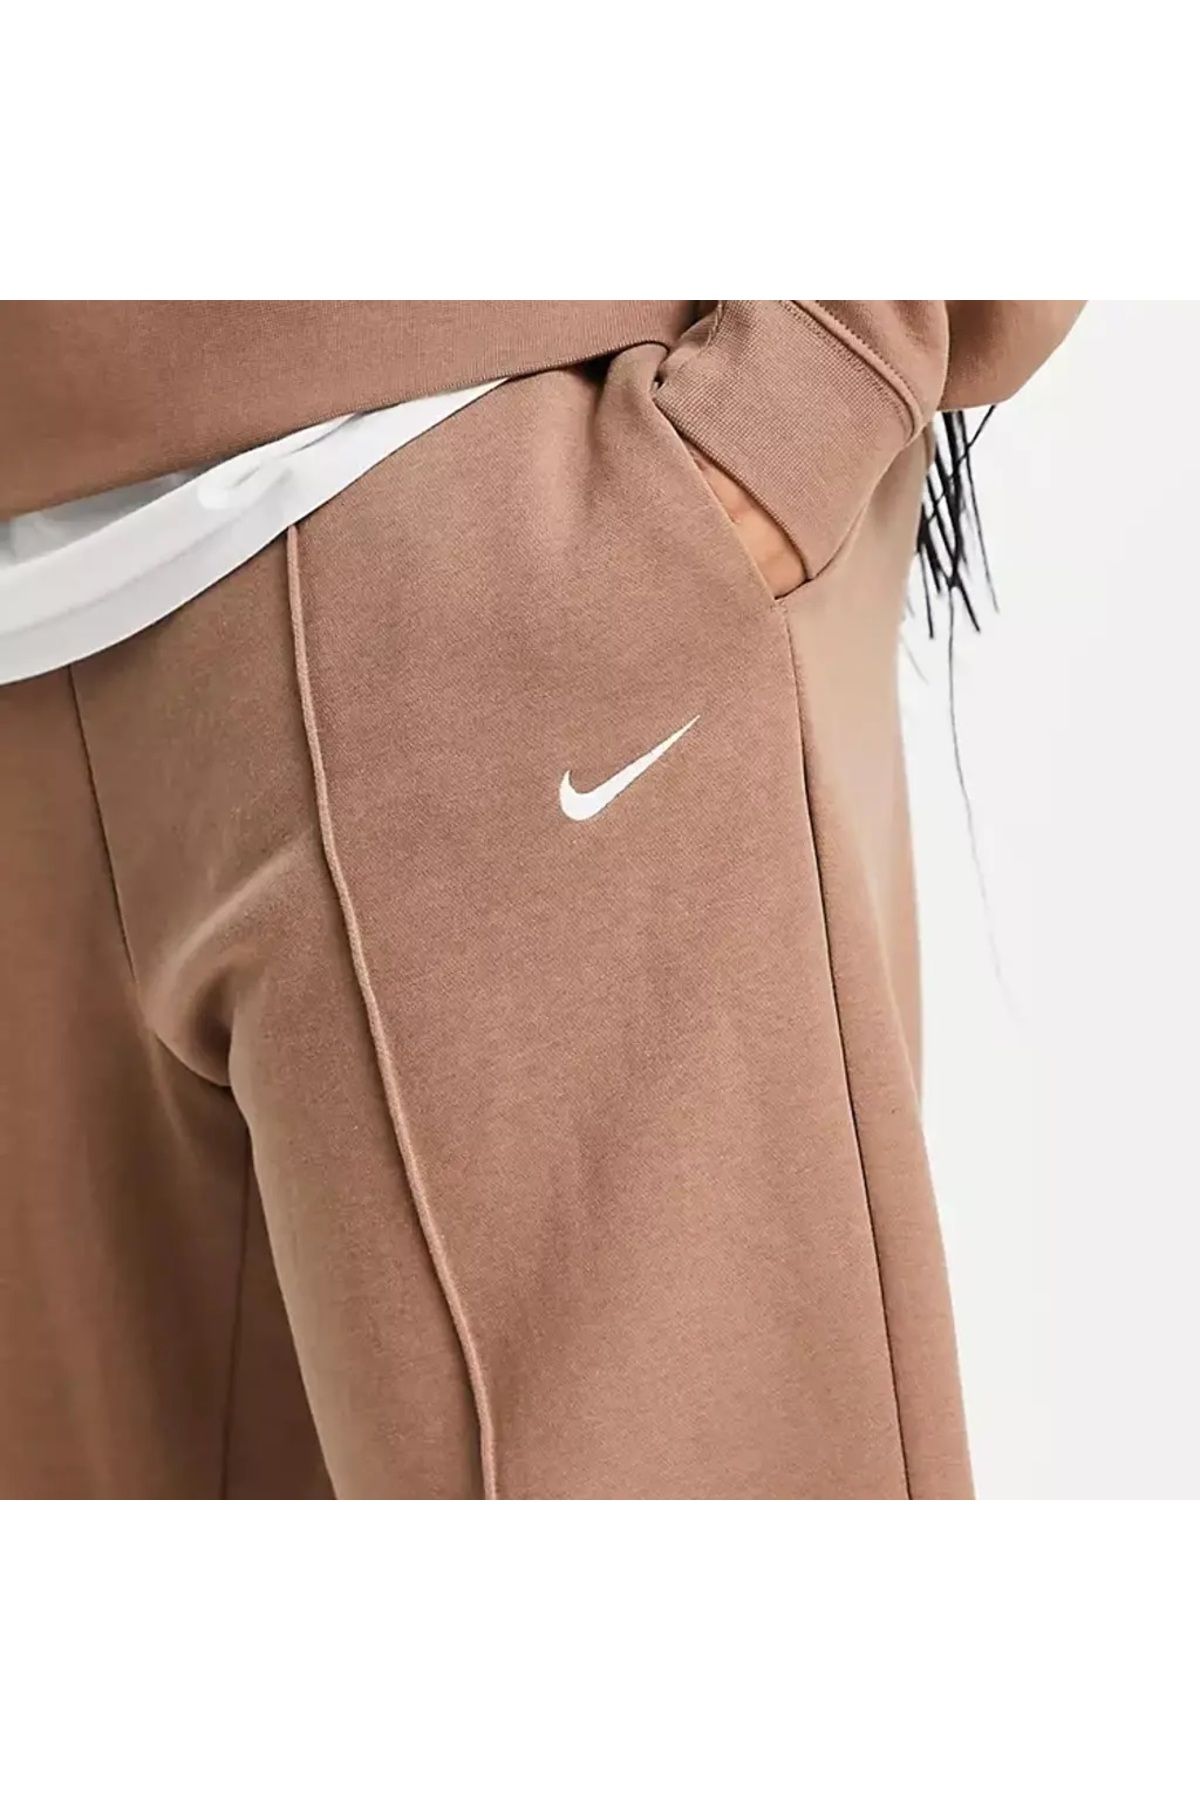 Nike Tech Fleece Womens